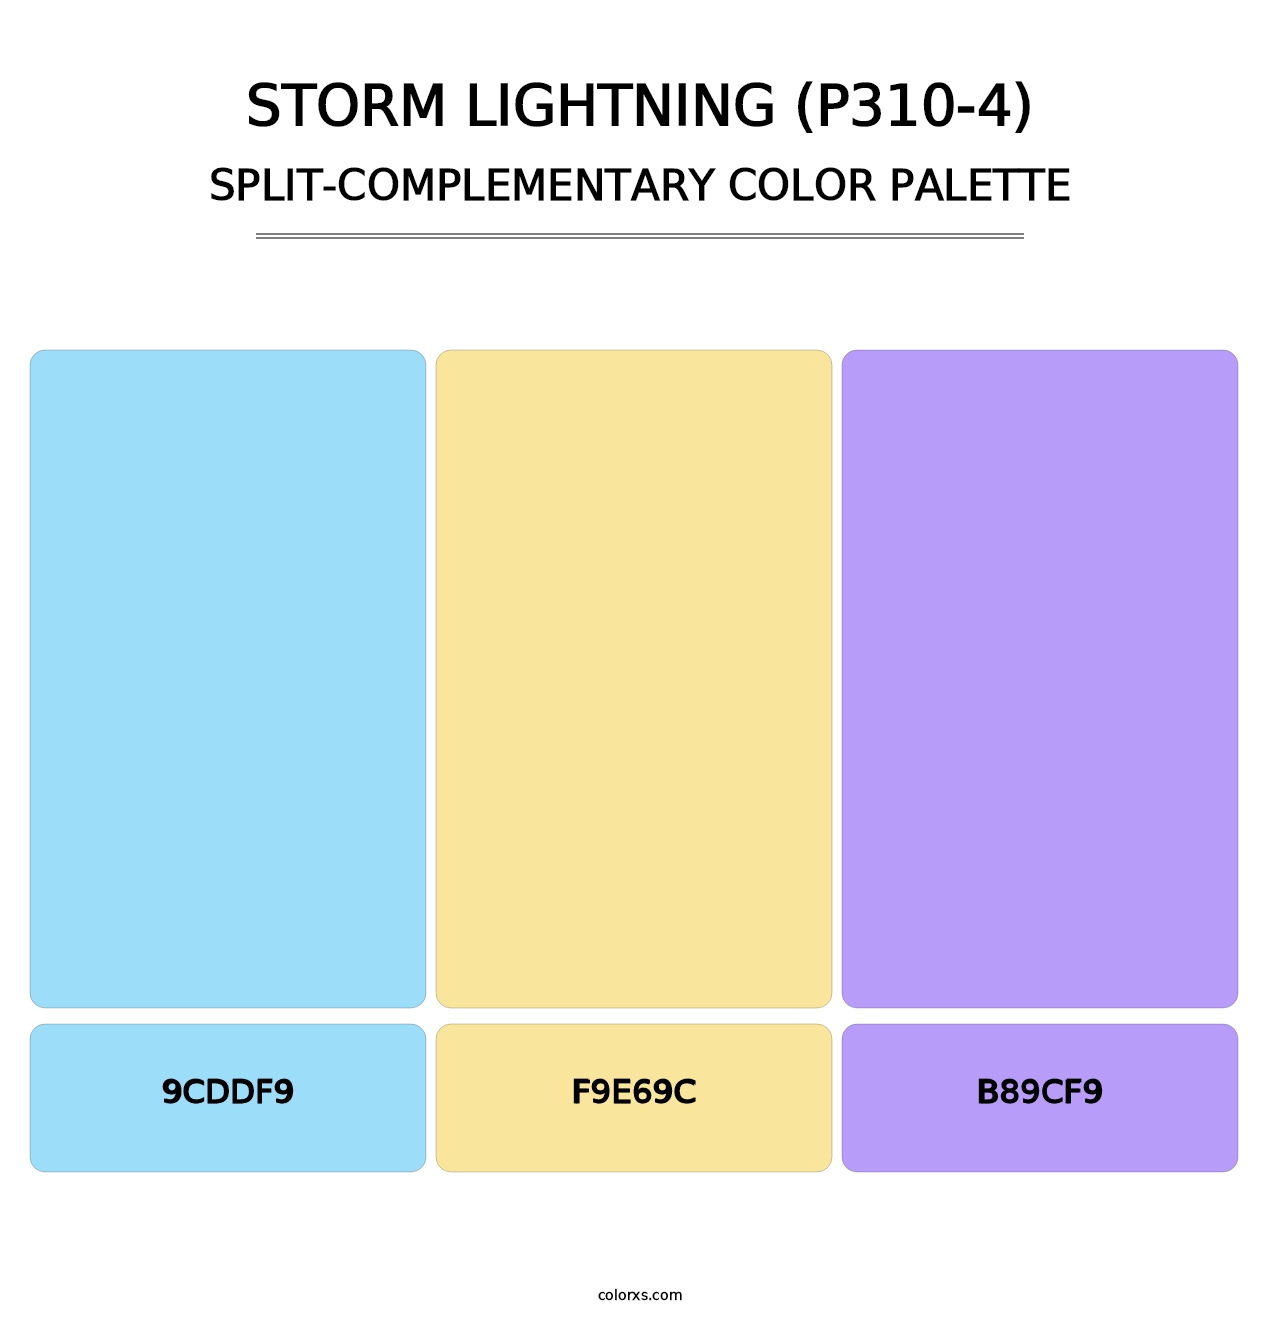 Storm Lightning (P310-4) - Split-Complementary Color Palette